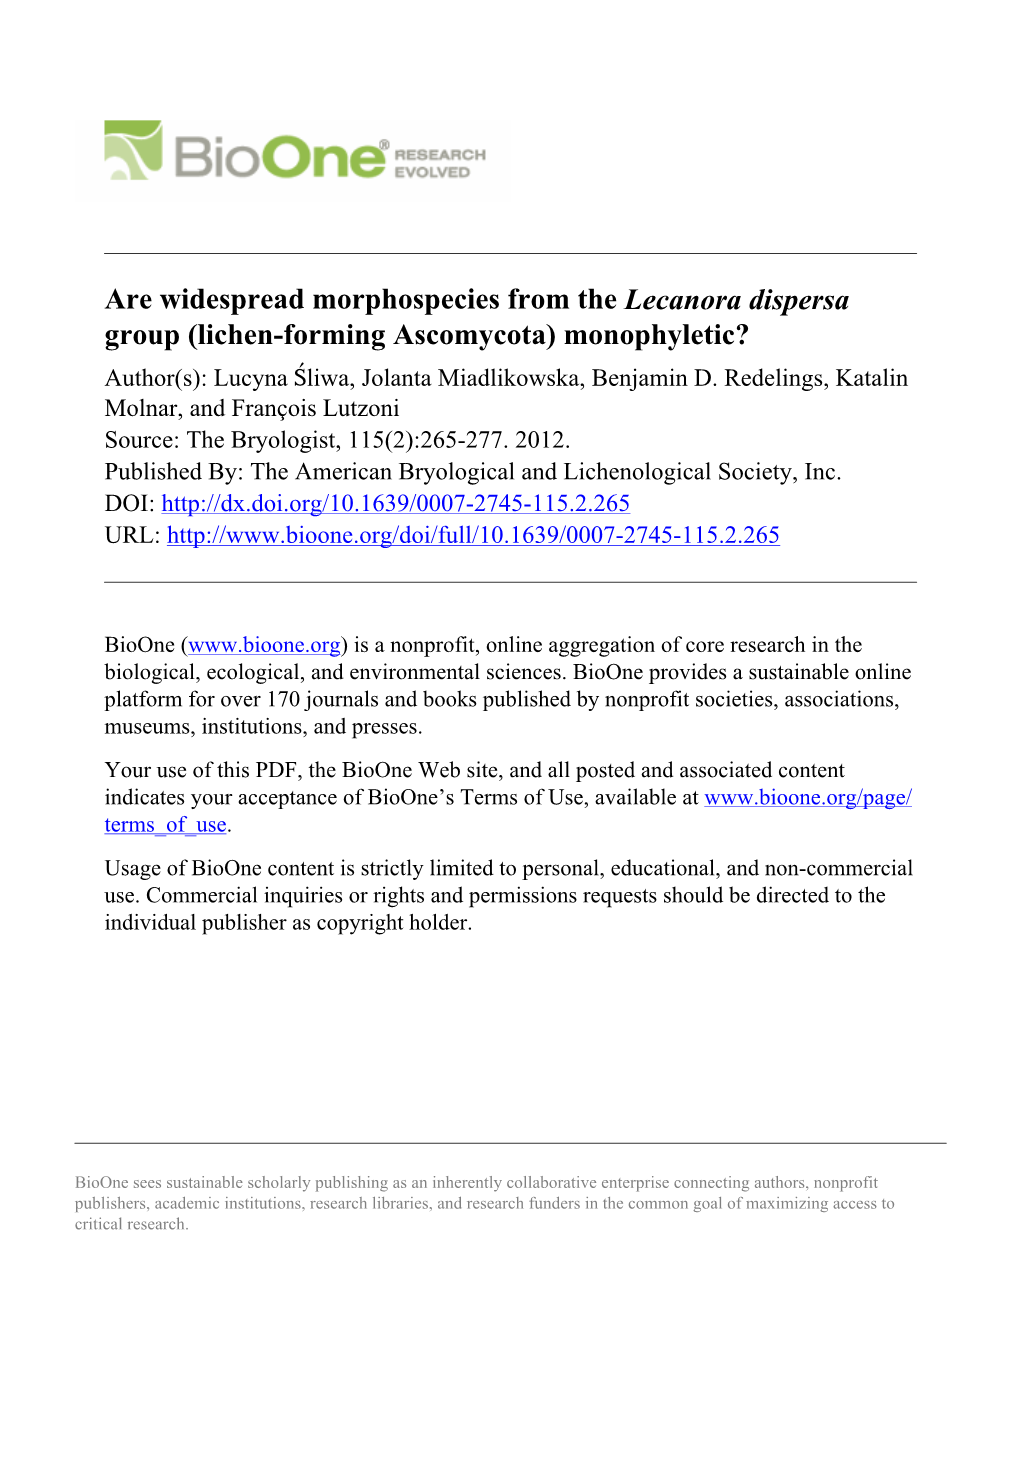 Are Widespread Morphospecies from the Lecanora Dispersa Group (Lichen-Forming Ascomycota) Monophyletic? Author(S): Lucyna Śliwa, Jolanta Miadlikowska, Benjamin D